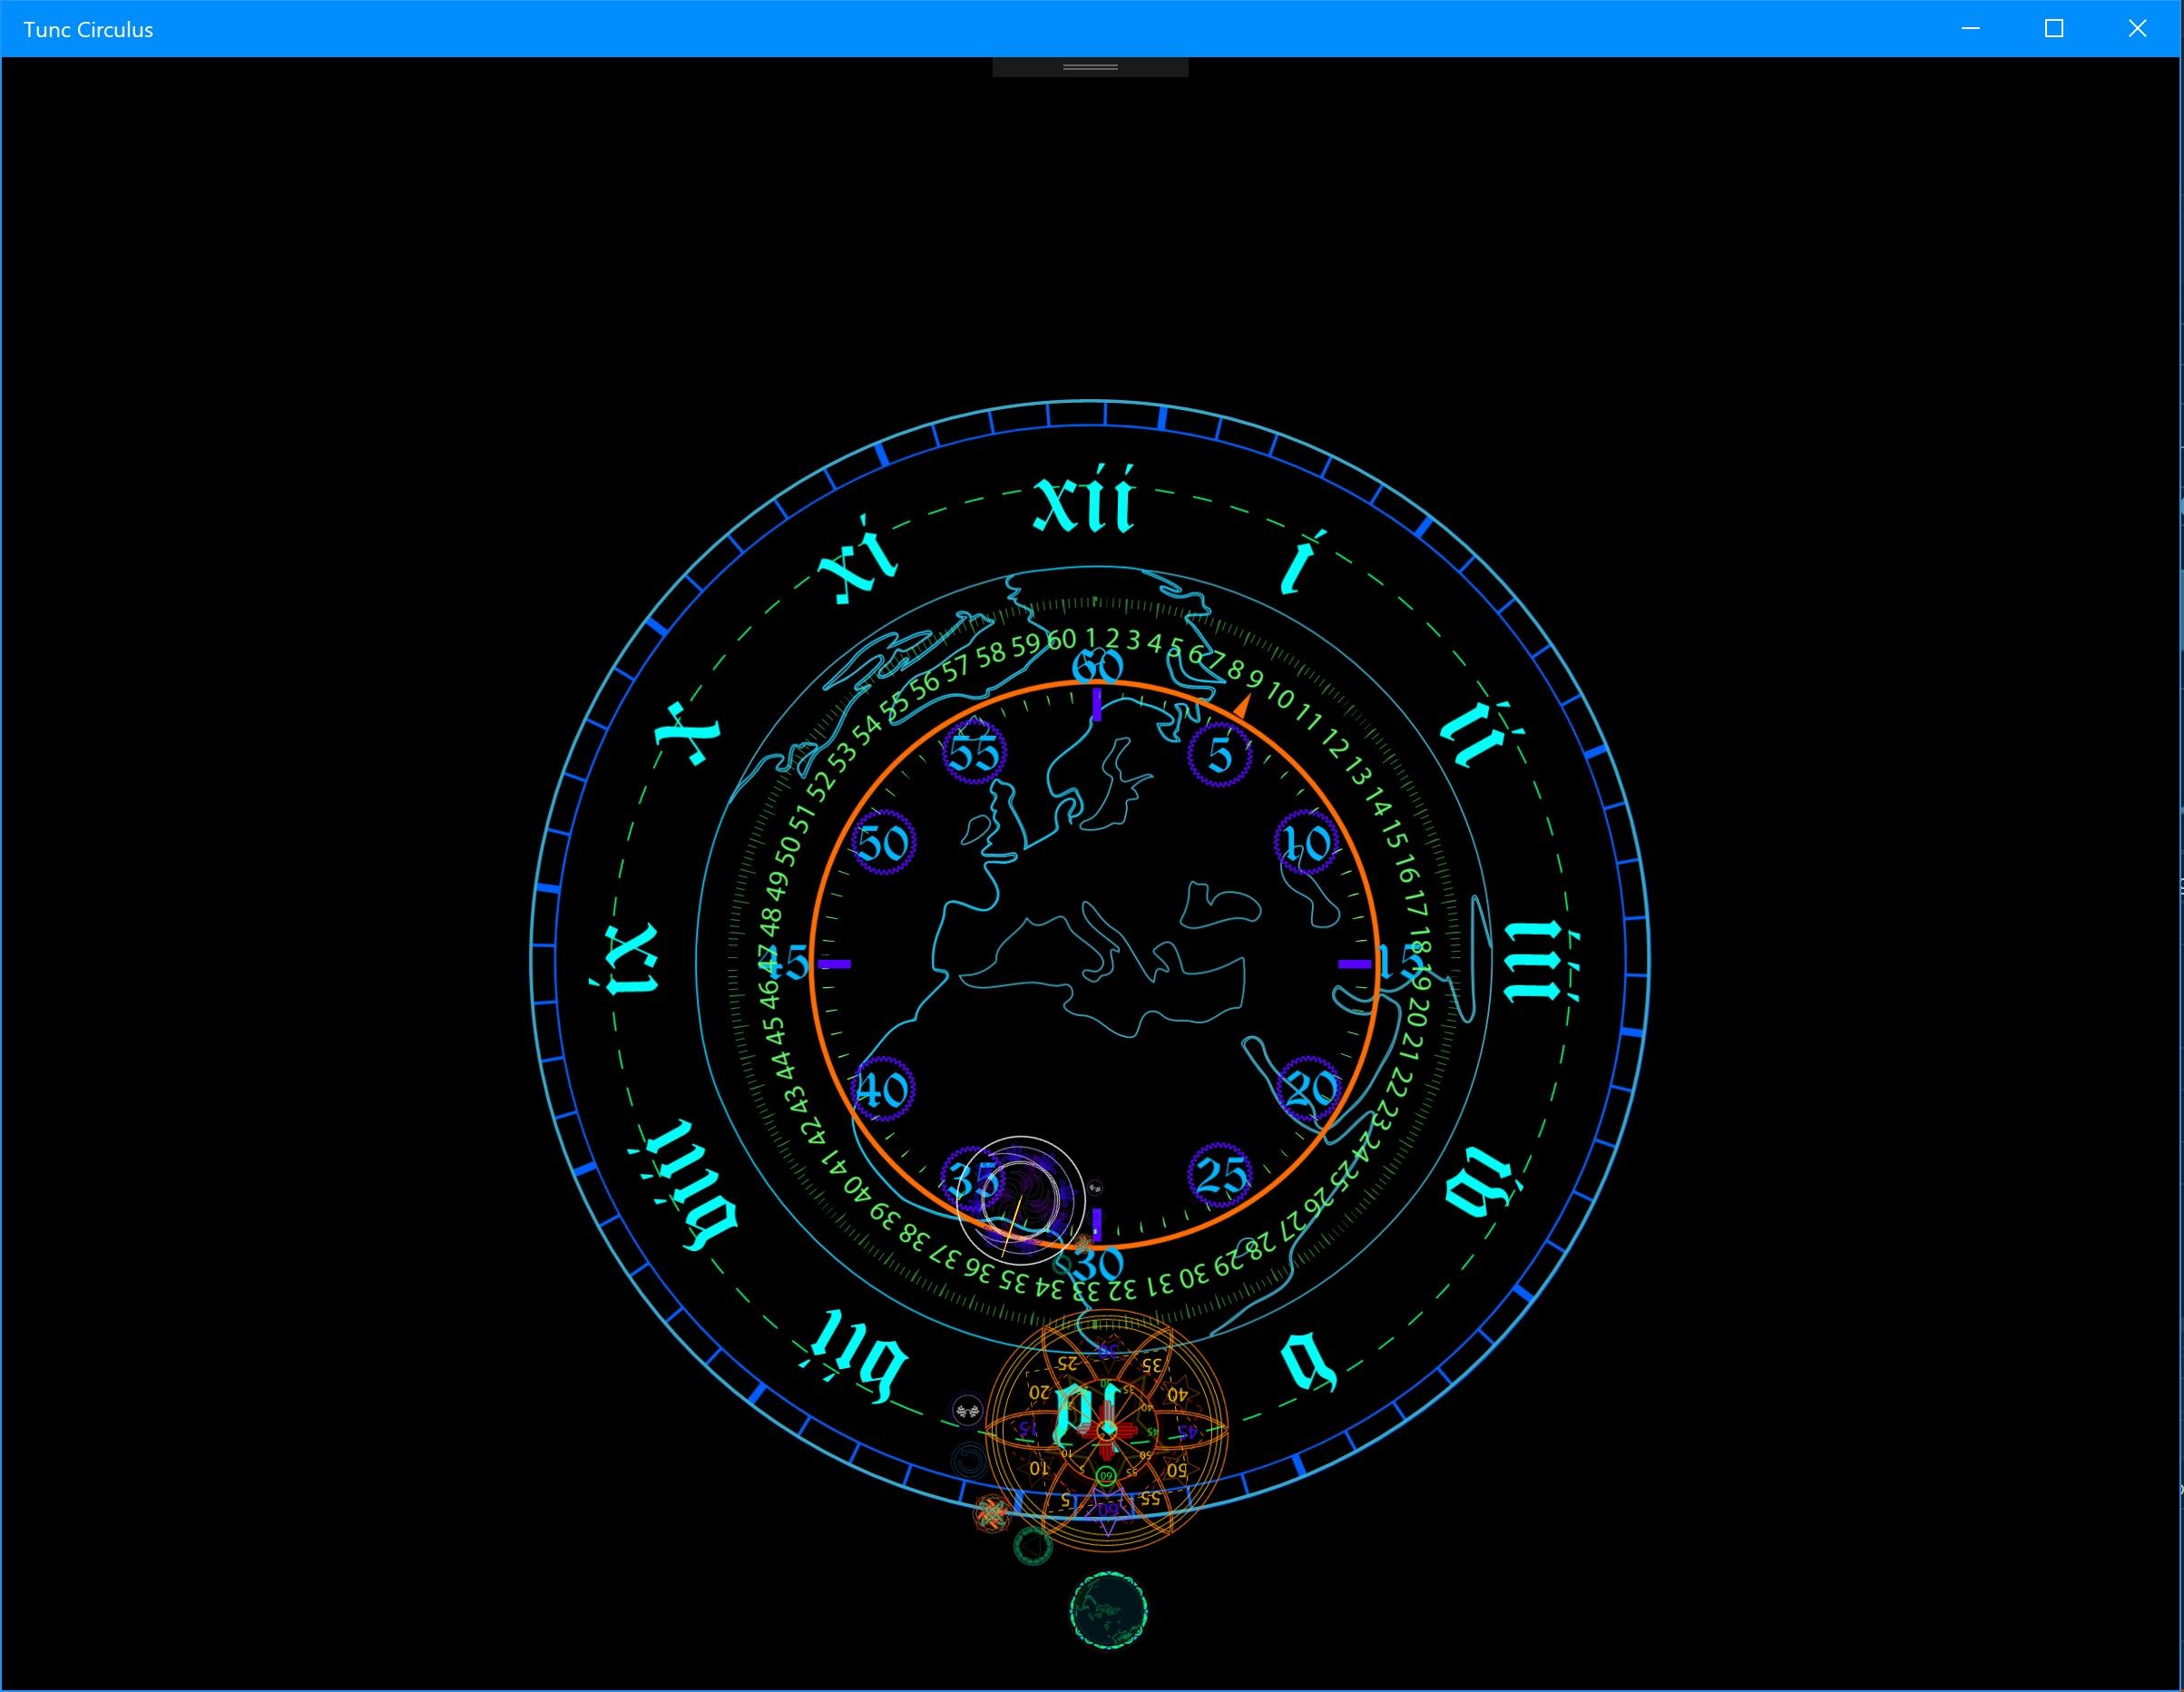 Glyph Clock (Tunc Circulus)